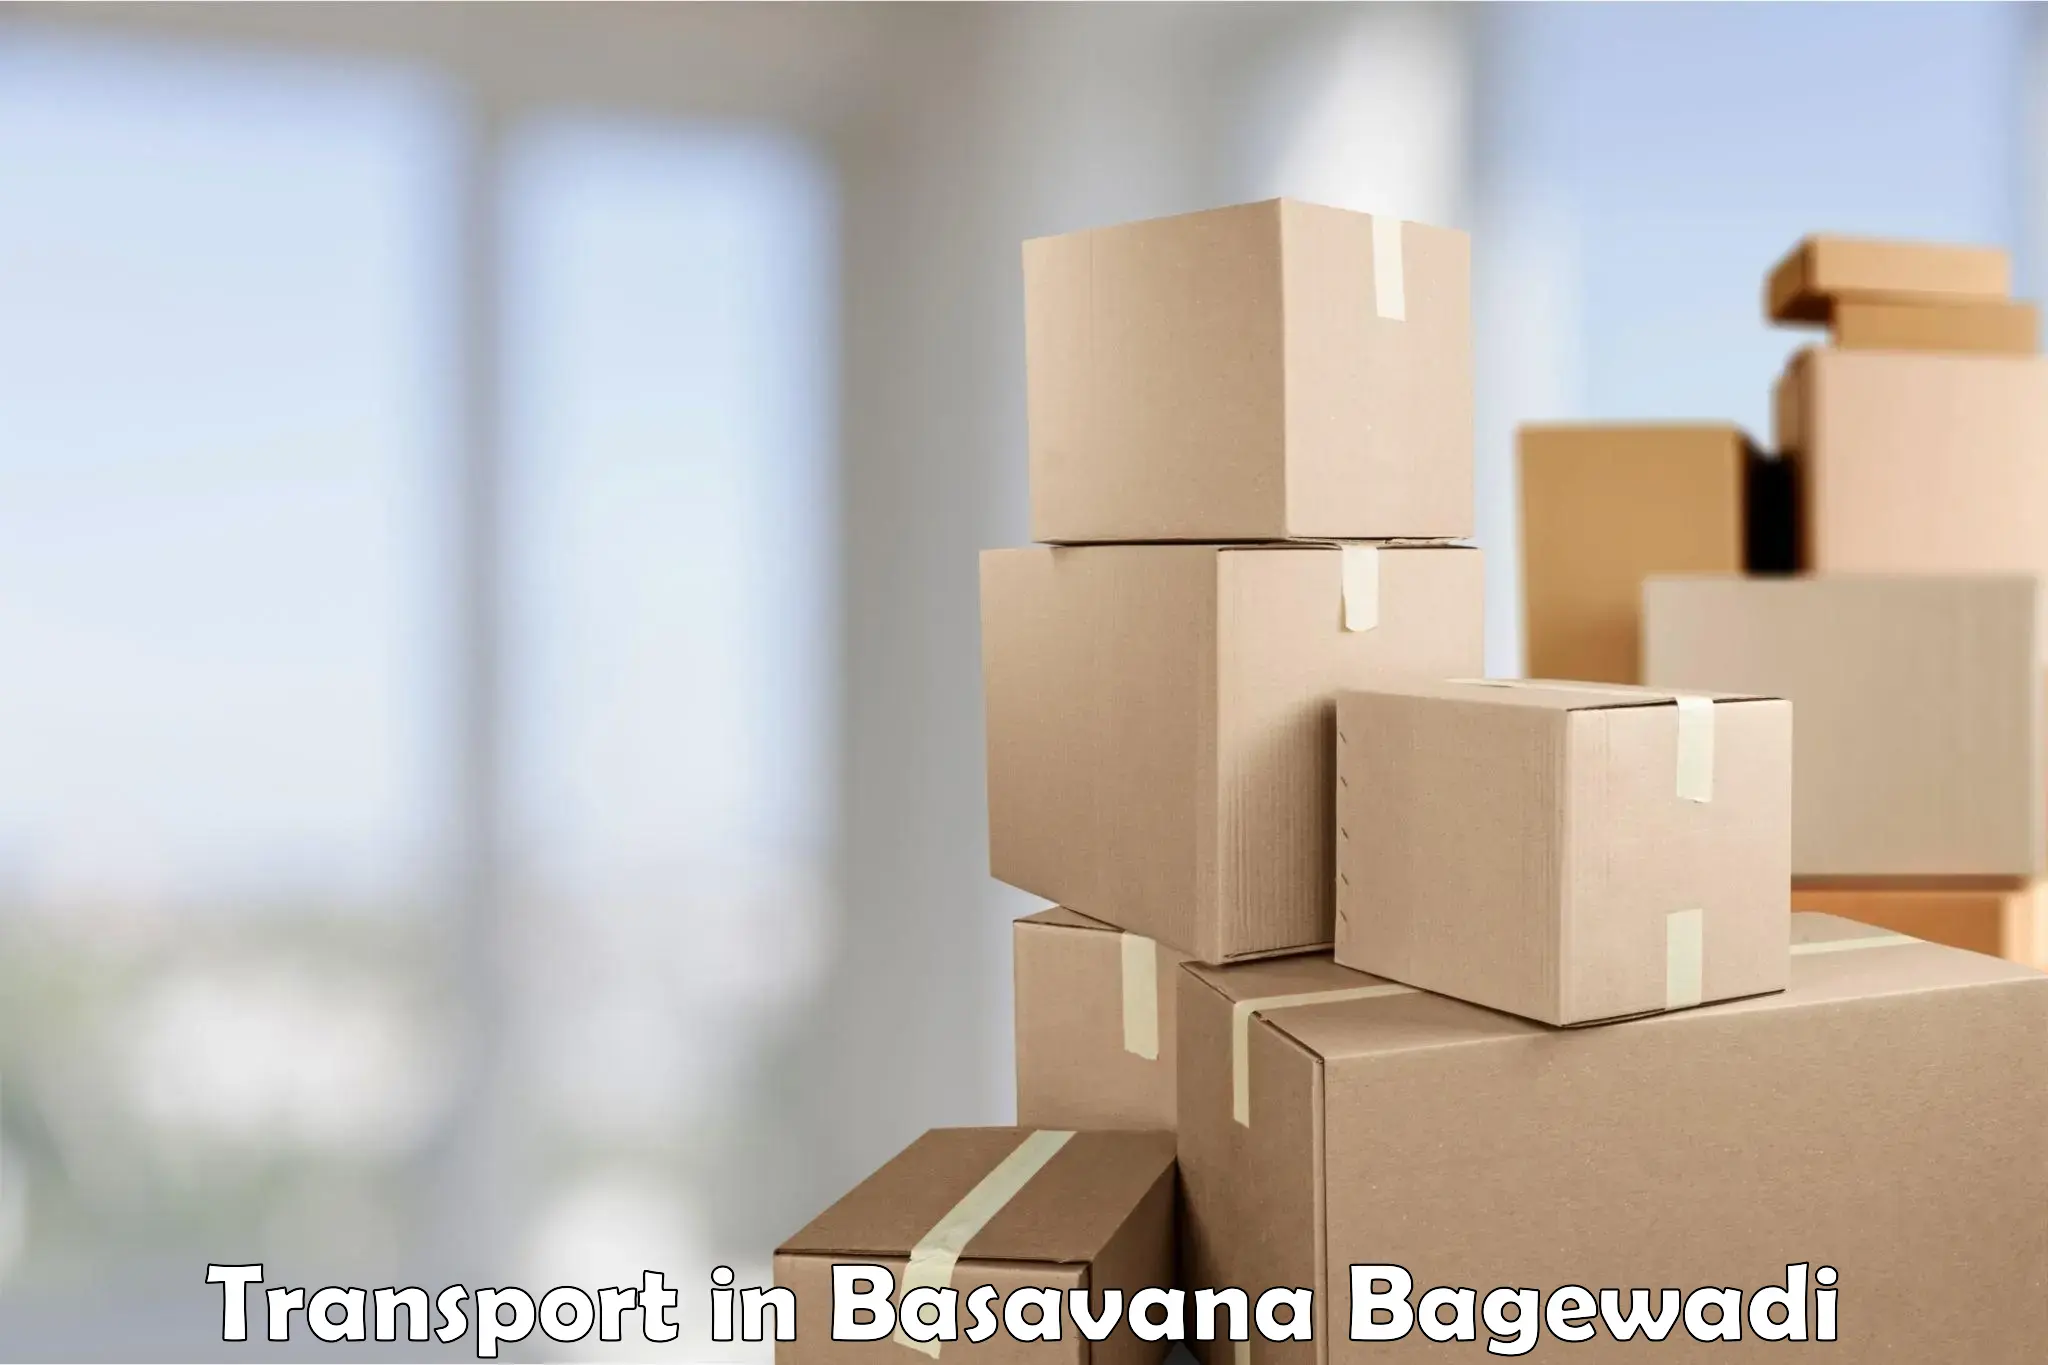 Daily parcel service transport in Basavana Bagewadi